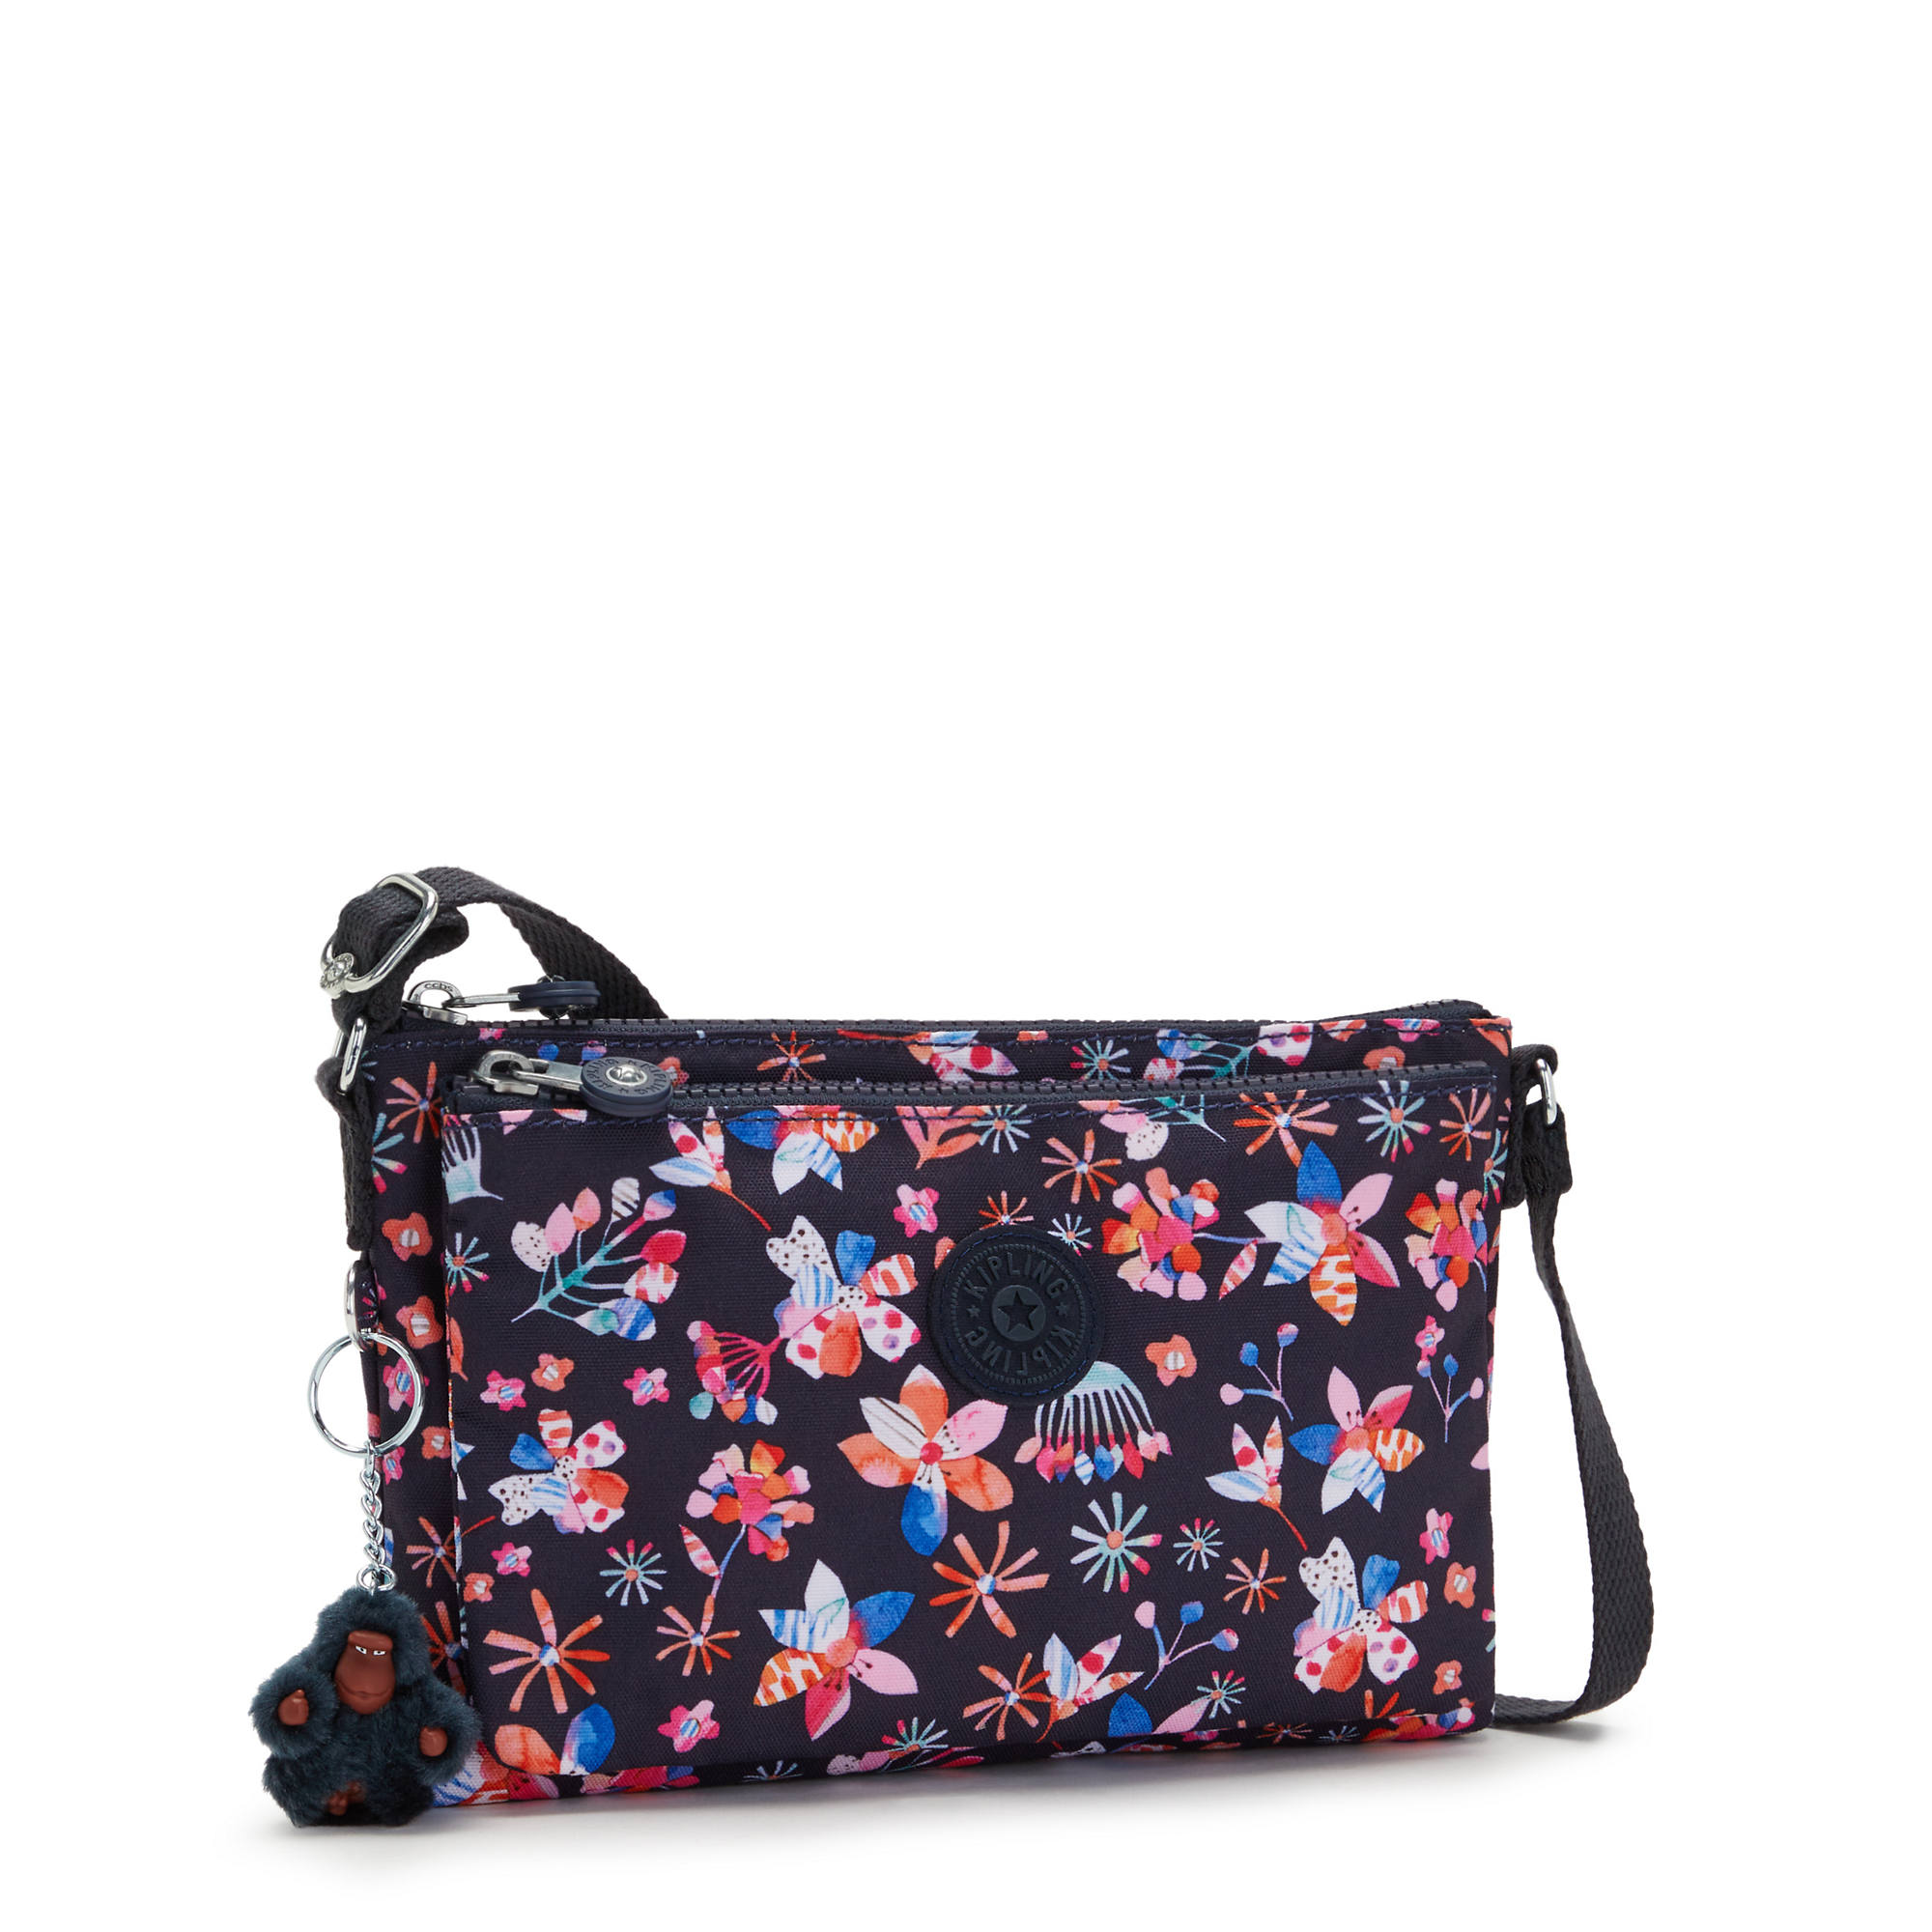 Kipling Women's Mikaela Printed Crossbody Bag with Adjustable Strap | eBay